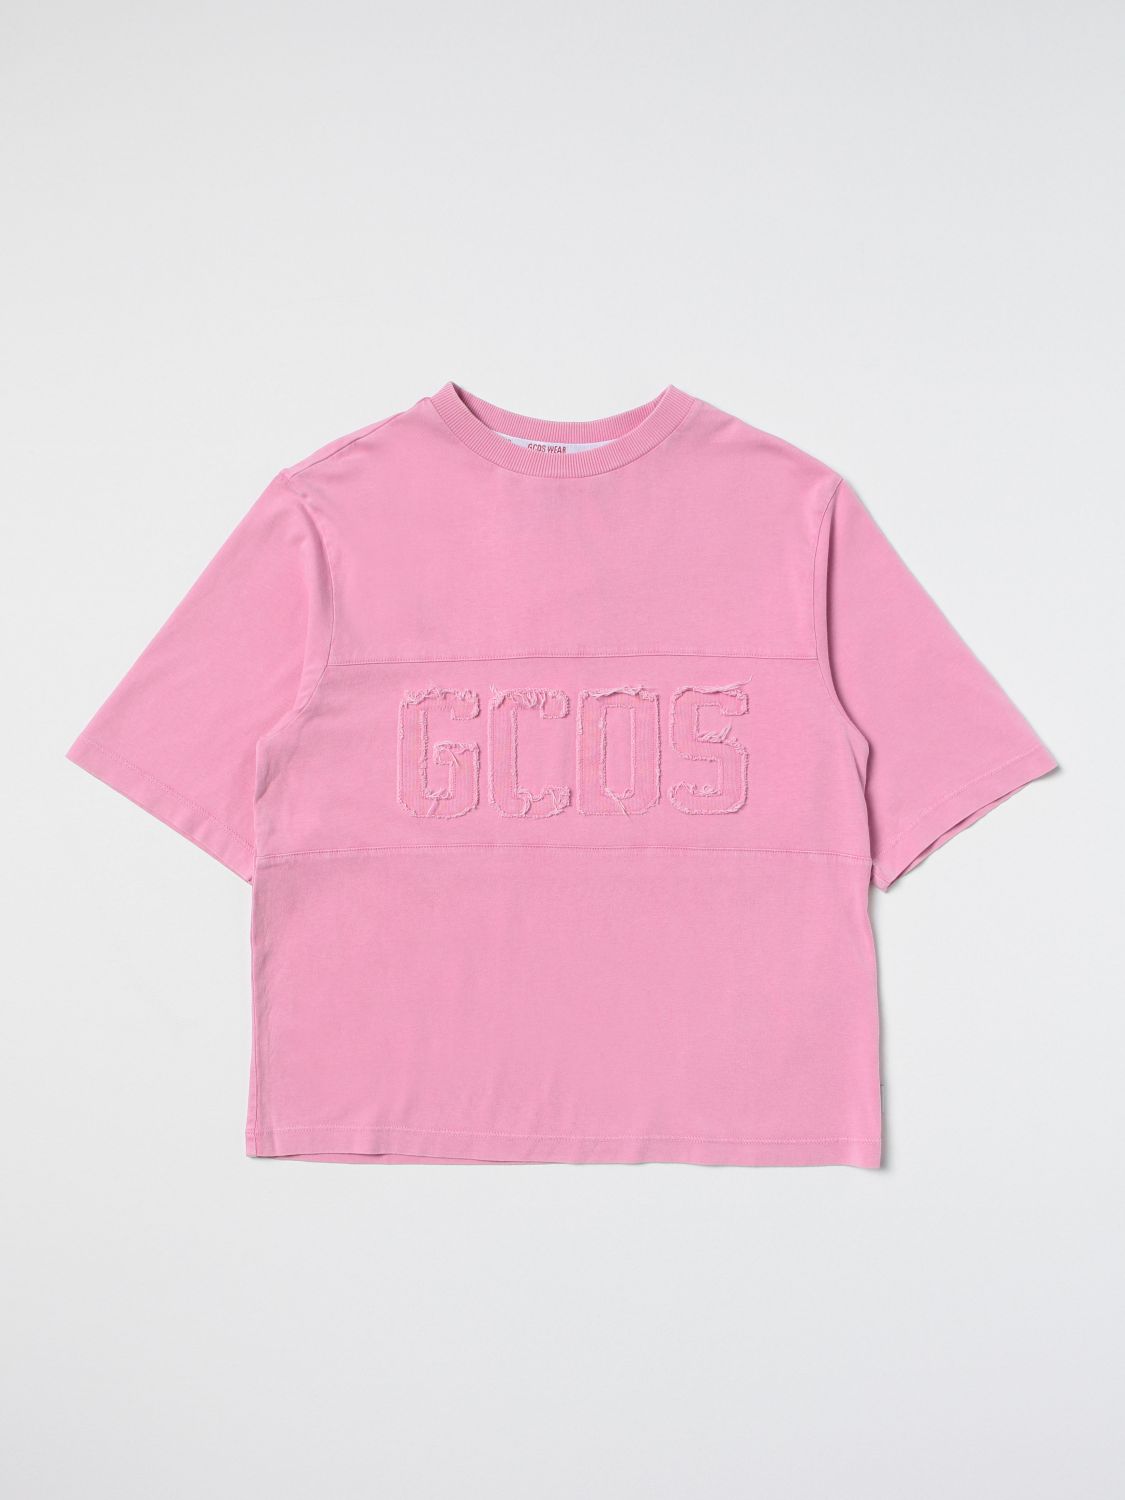 Gcds T-shirt  Kids Kids Color Pink